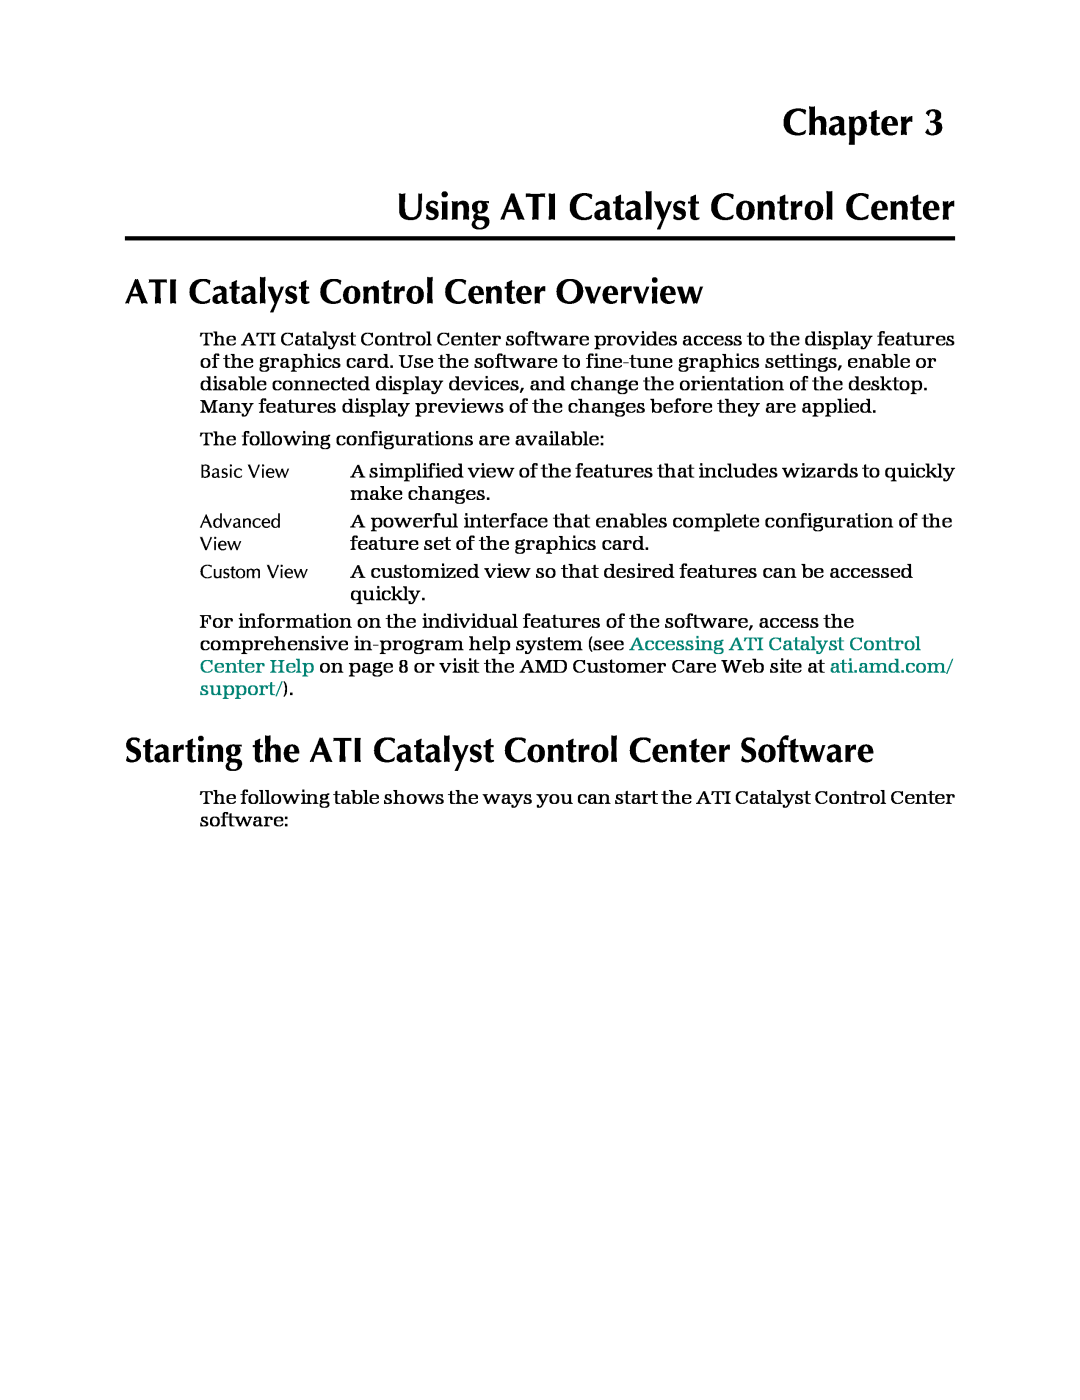 AMD 4850 manual Chapter Using ATI Catalyst Control Center, ATI Catalyst Control Center Overview 